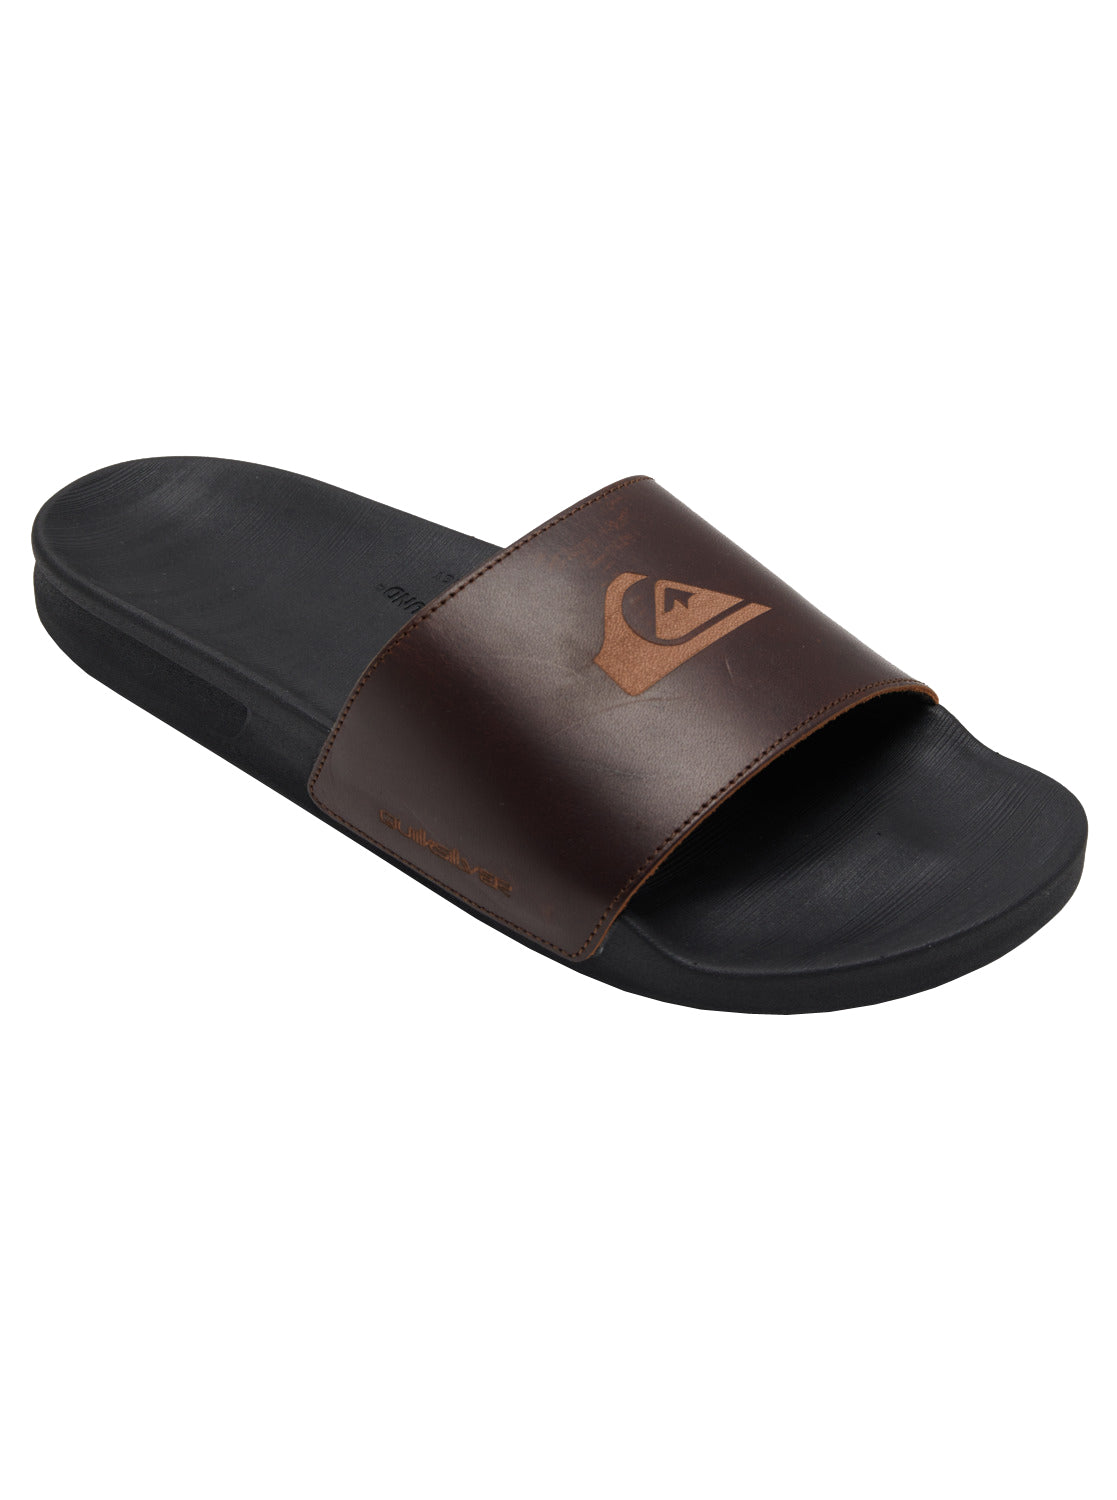 Quiksilver Rivi Leather Slide Mens Sandal XCKC-Brown-Black-Brown 10